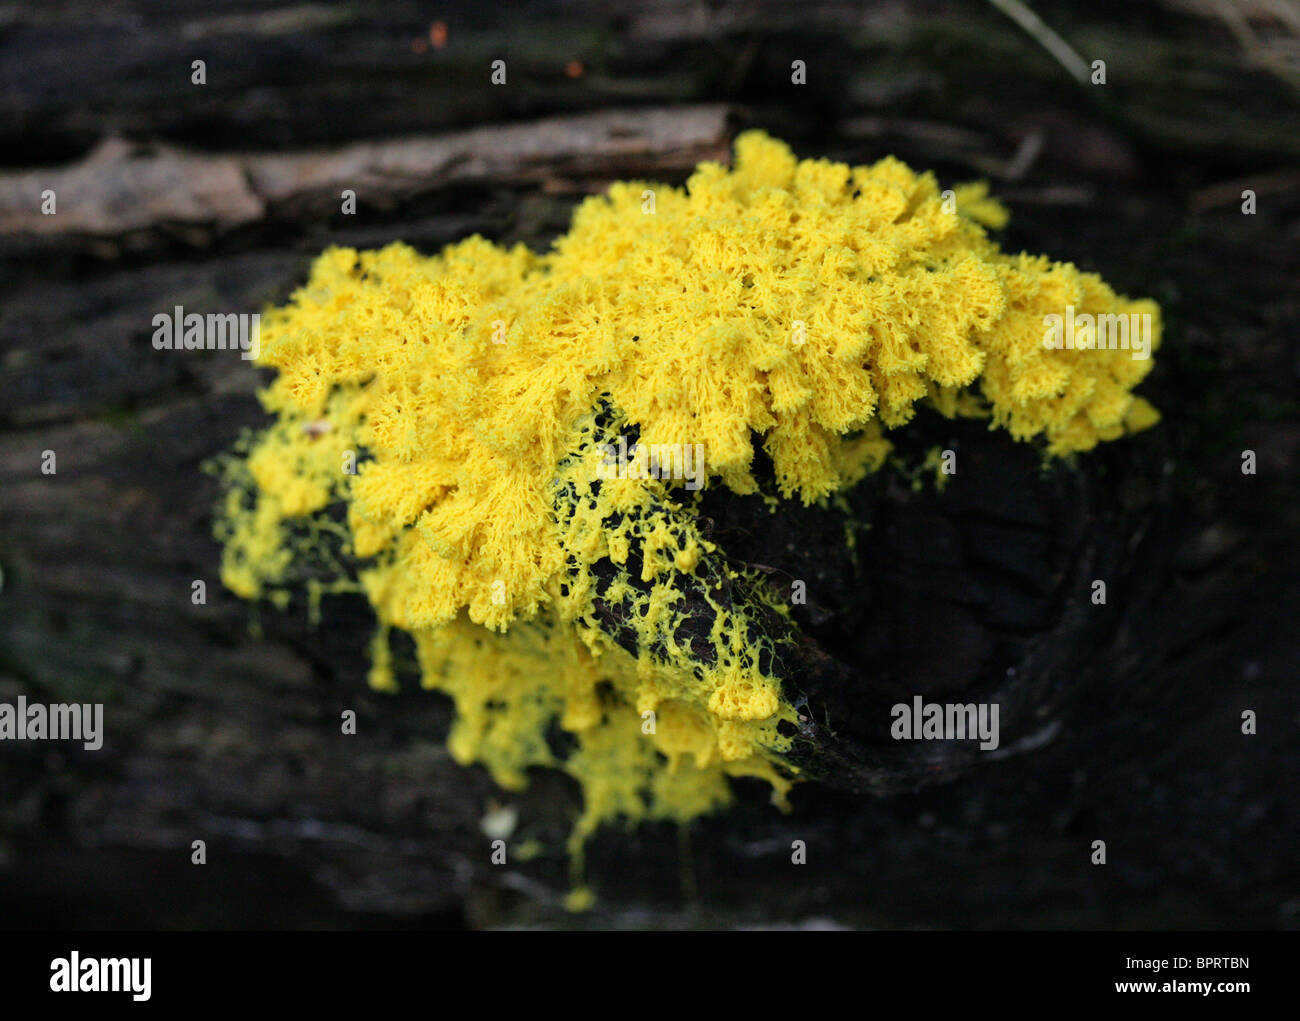 Sulphur Slime Mold, Fuligo septica, Physaraceae. Aka Flowers of Tan, Scrambled-egg Slime Mold and Dog Vomit Slime Mold. Stock Photo